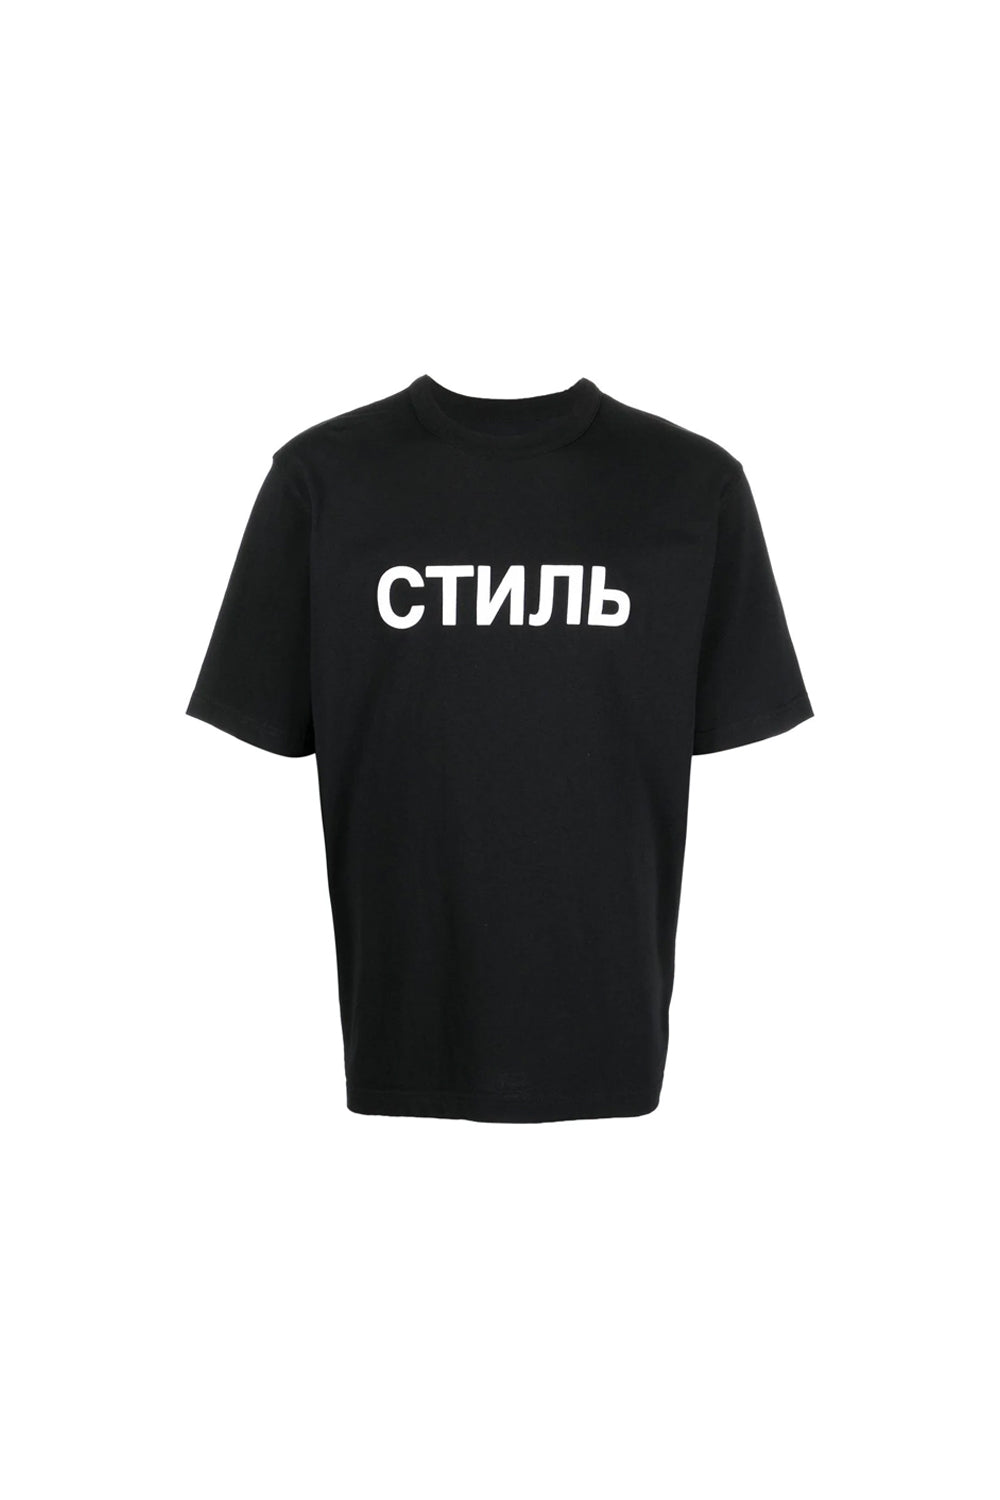 Heron Preston CTNMB short-sleeve T-Shirt